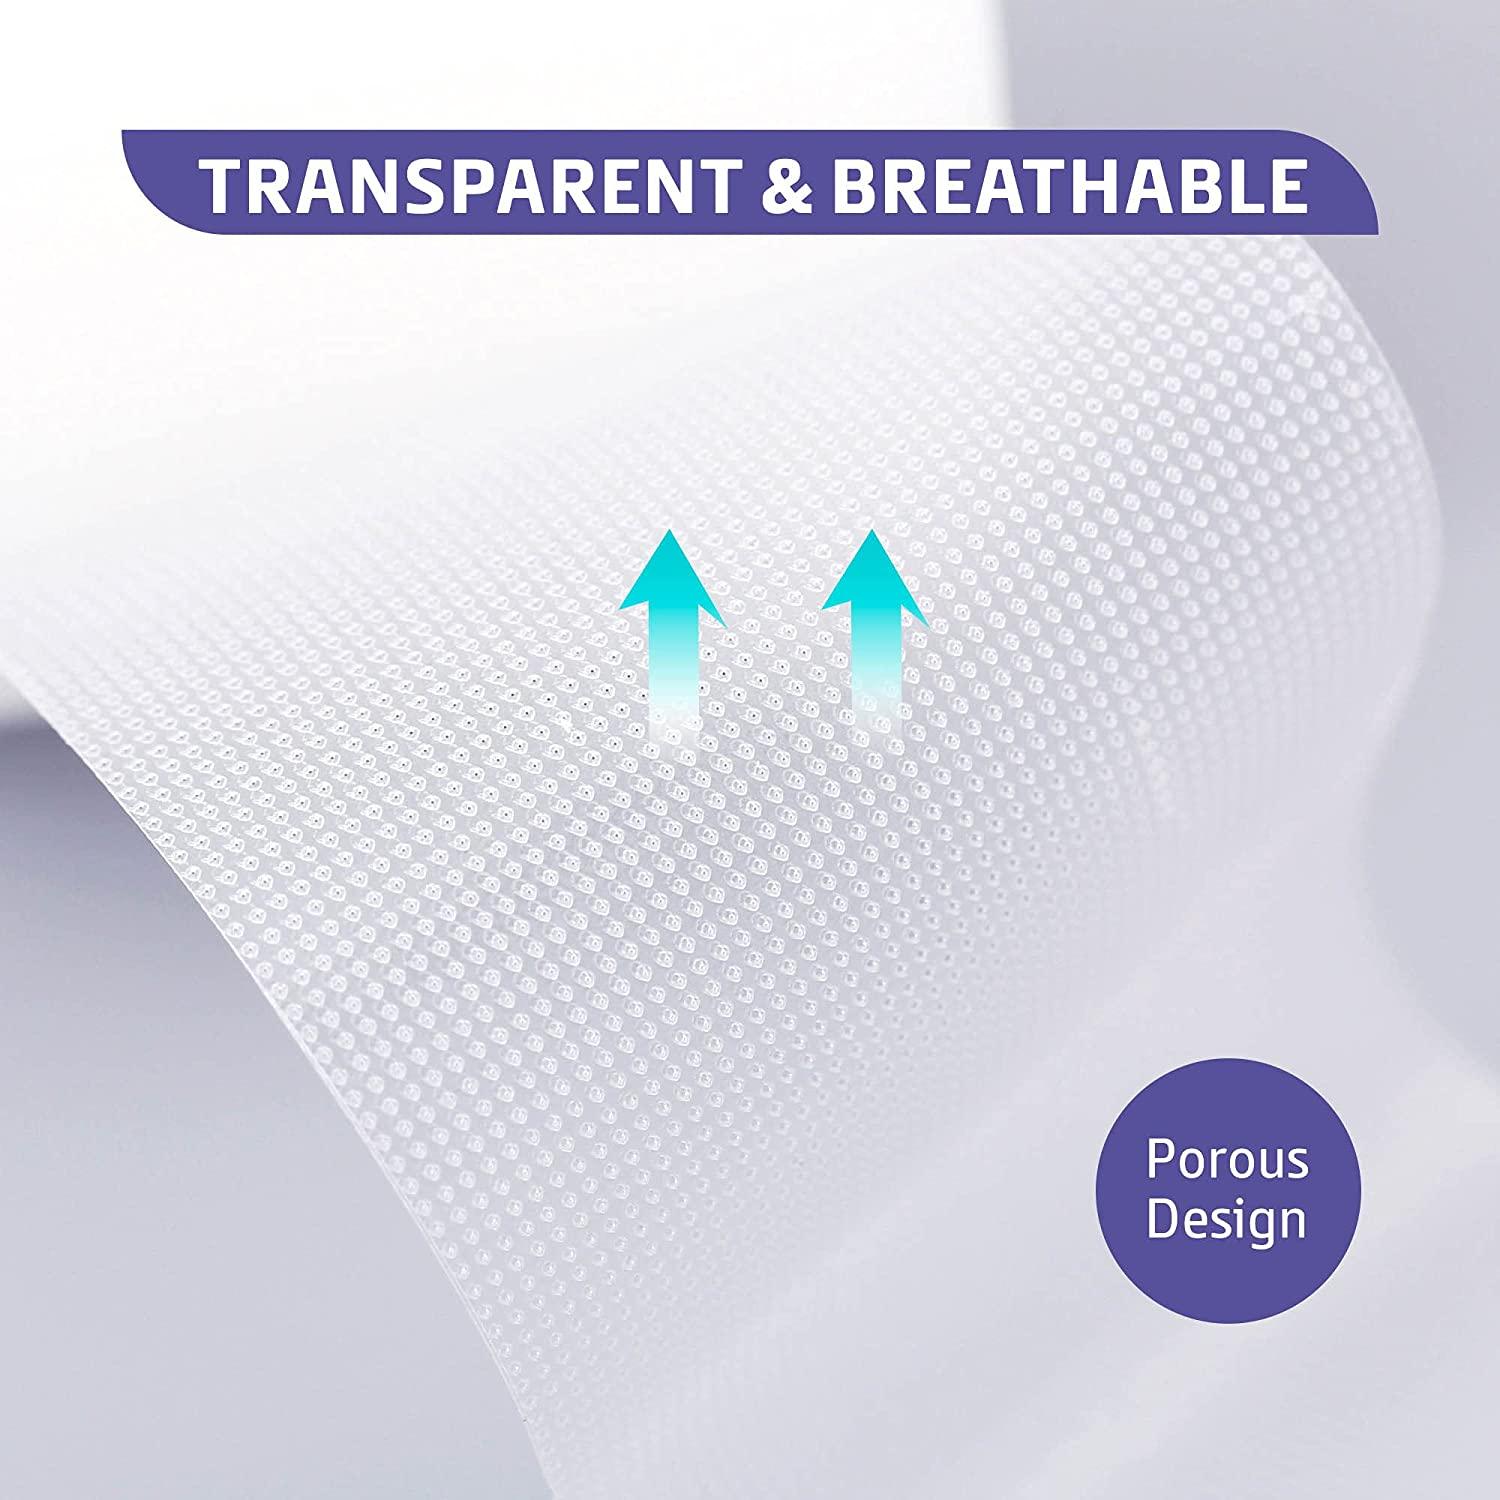 Conkote® Transparent Surgical Tape